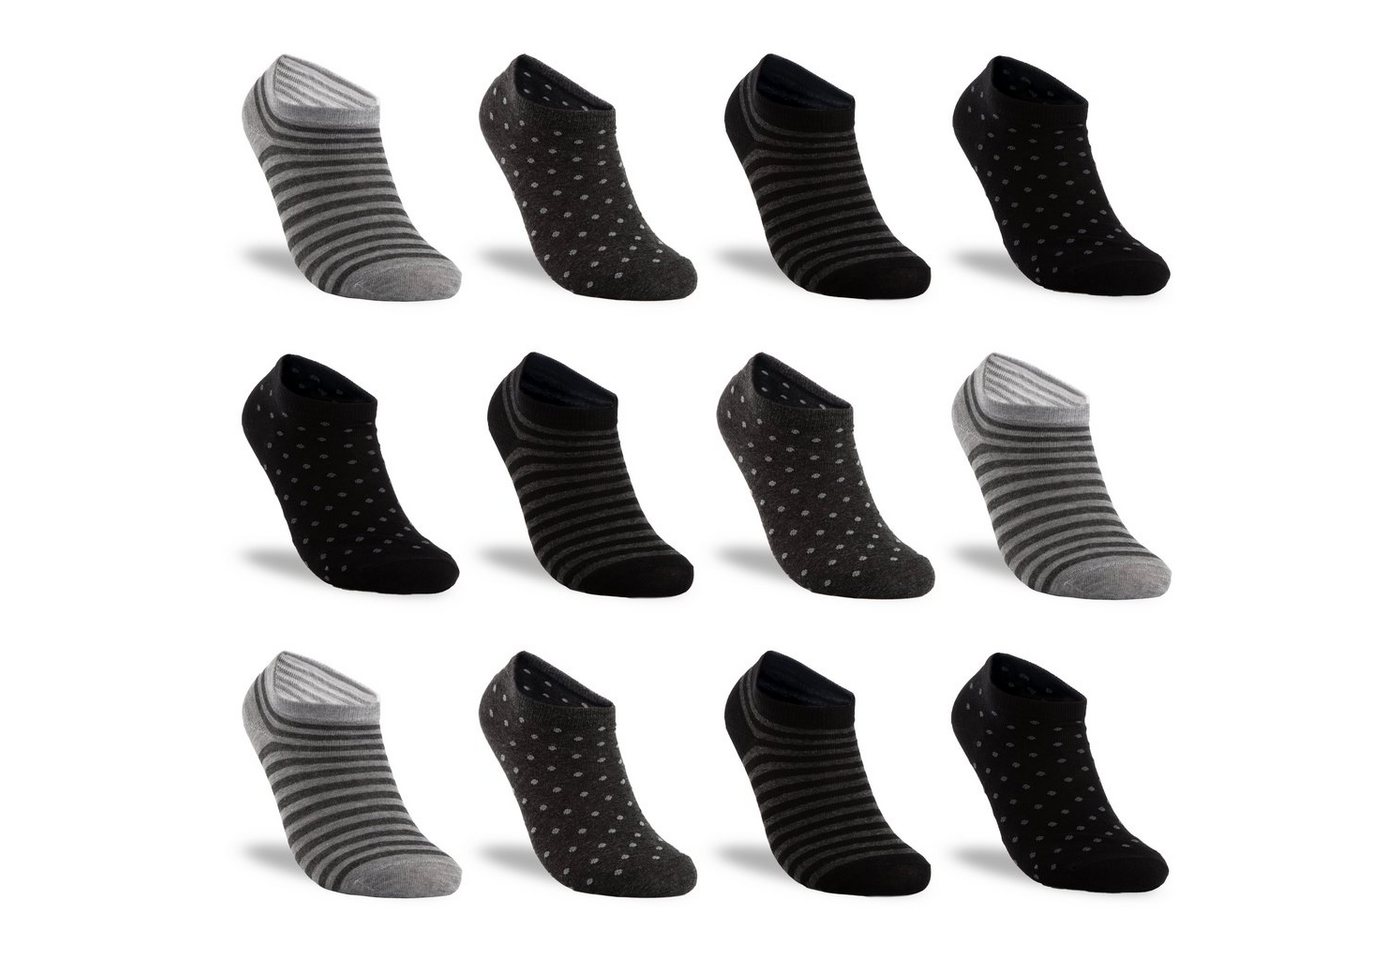 TEXEMP Sneakersocken 6, 12, 18 Paar Damen Sneaker Socken Kinder Baumwolle Freizeit Sport (Packung, 18-Paar) 90% Baumwolle von TEXEMP